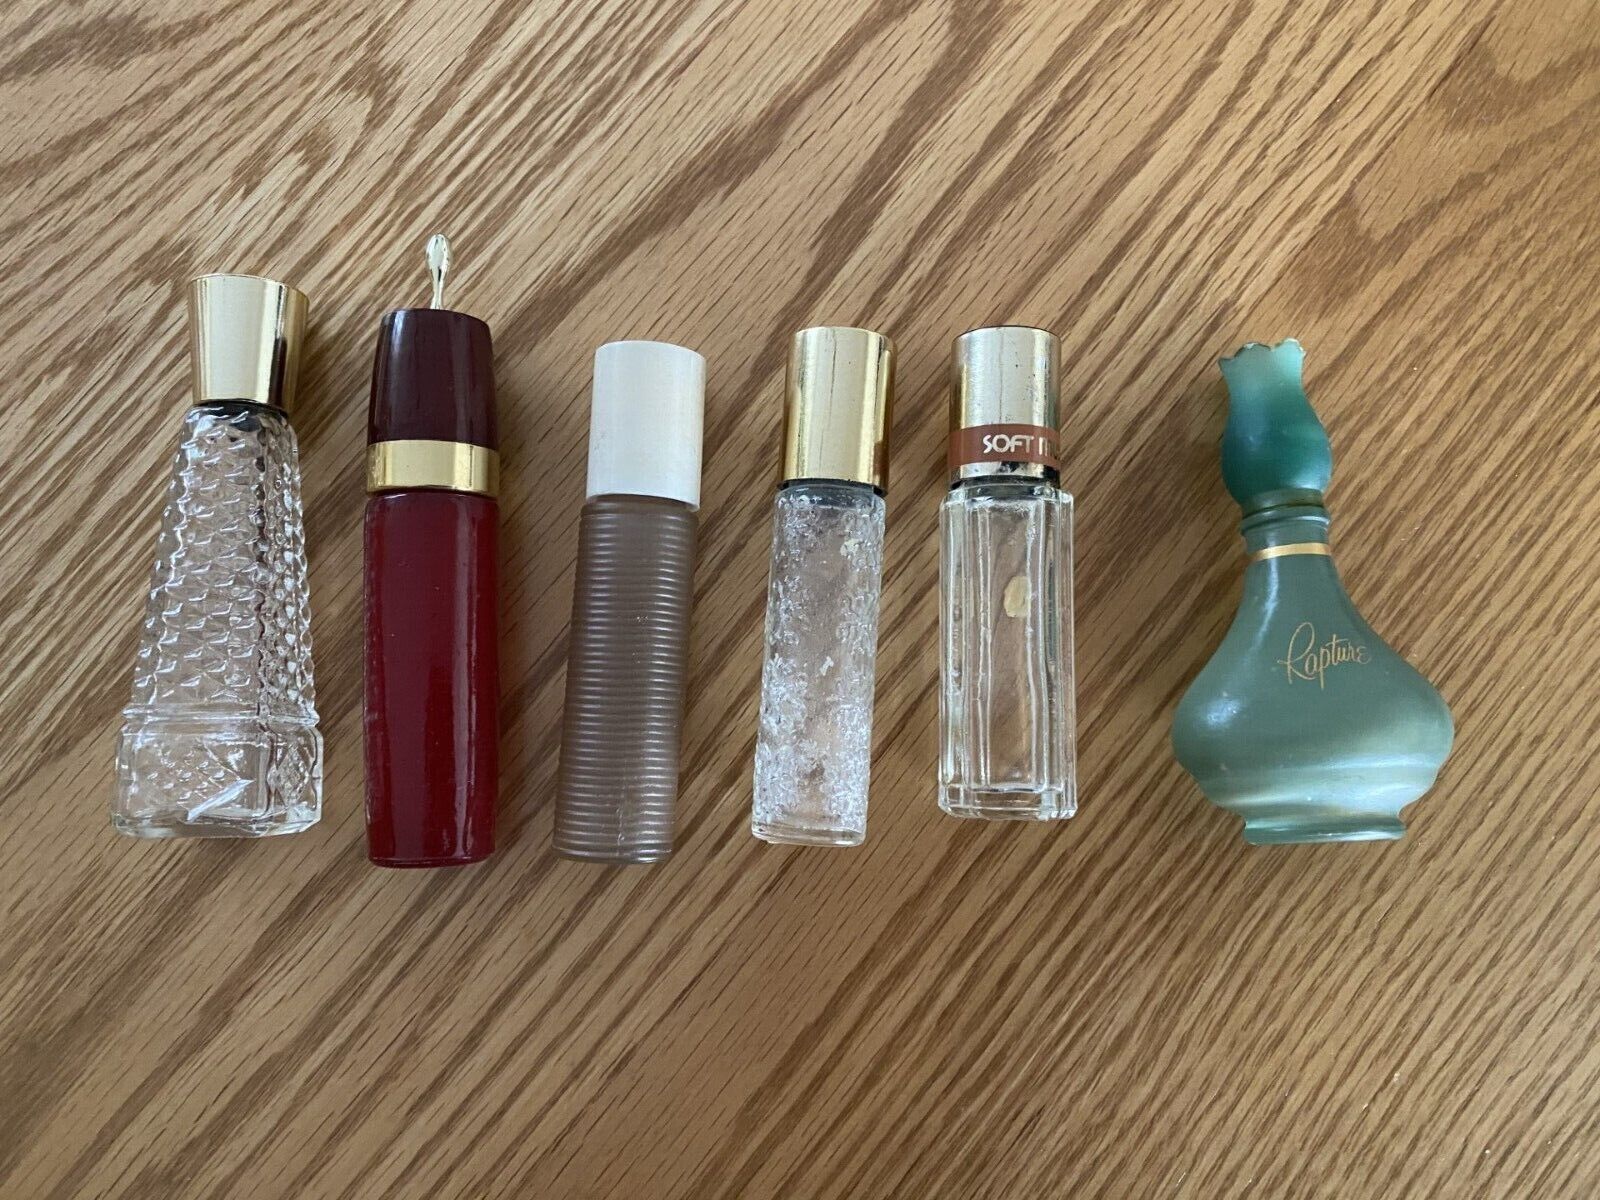 Vtg 70s Avon, Revlon, Vivi Mini Perfume Cologne Bottles EMPTY